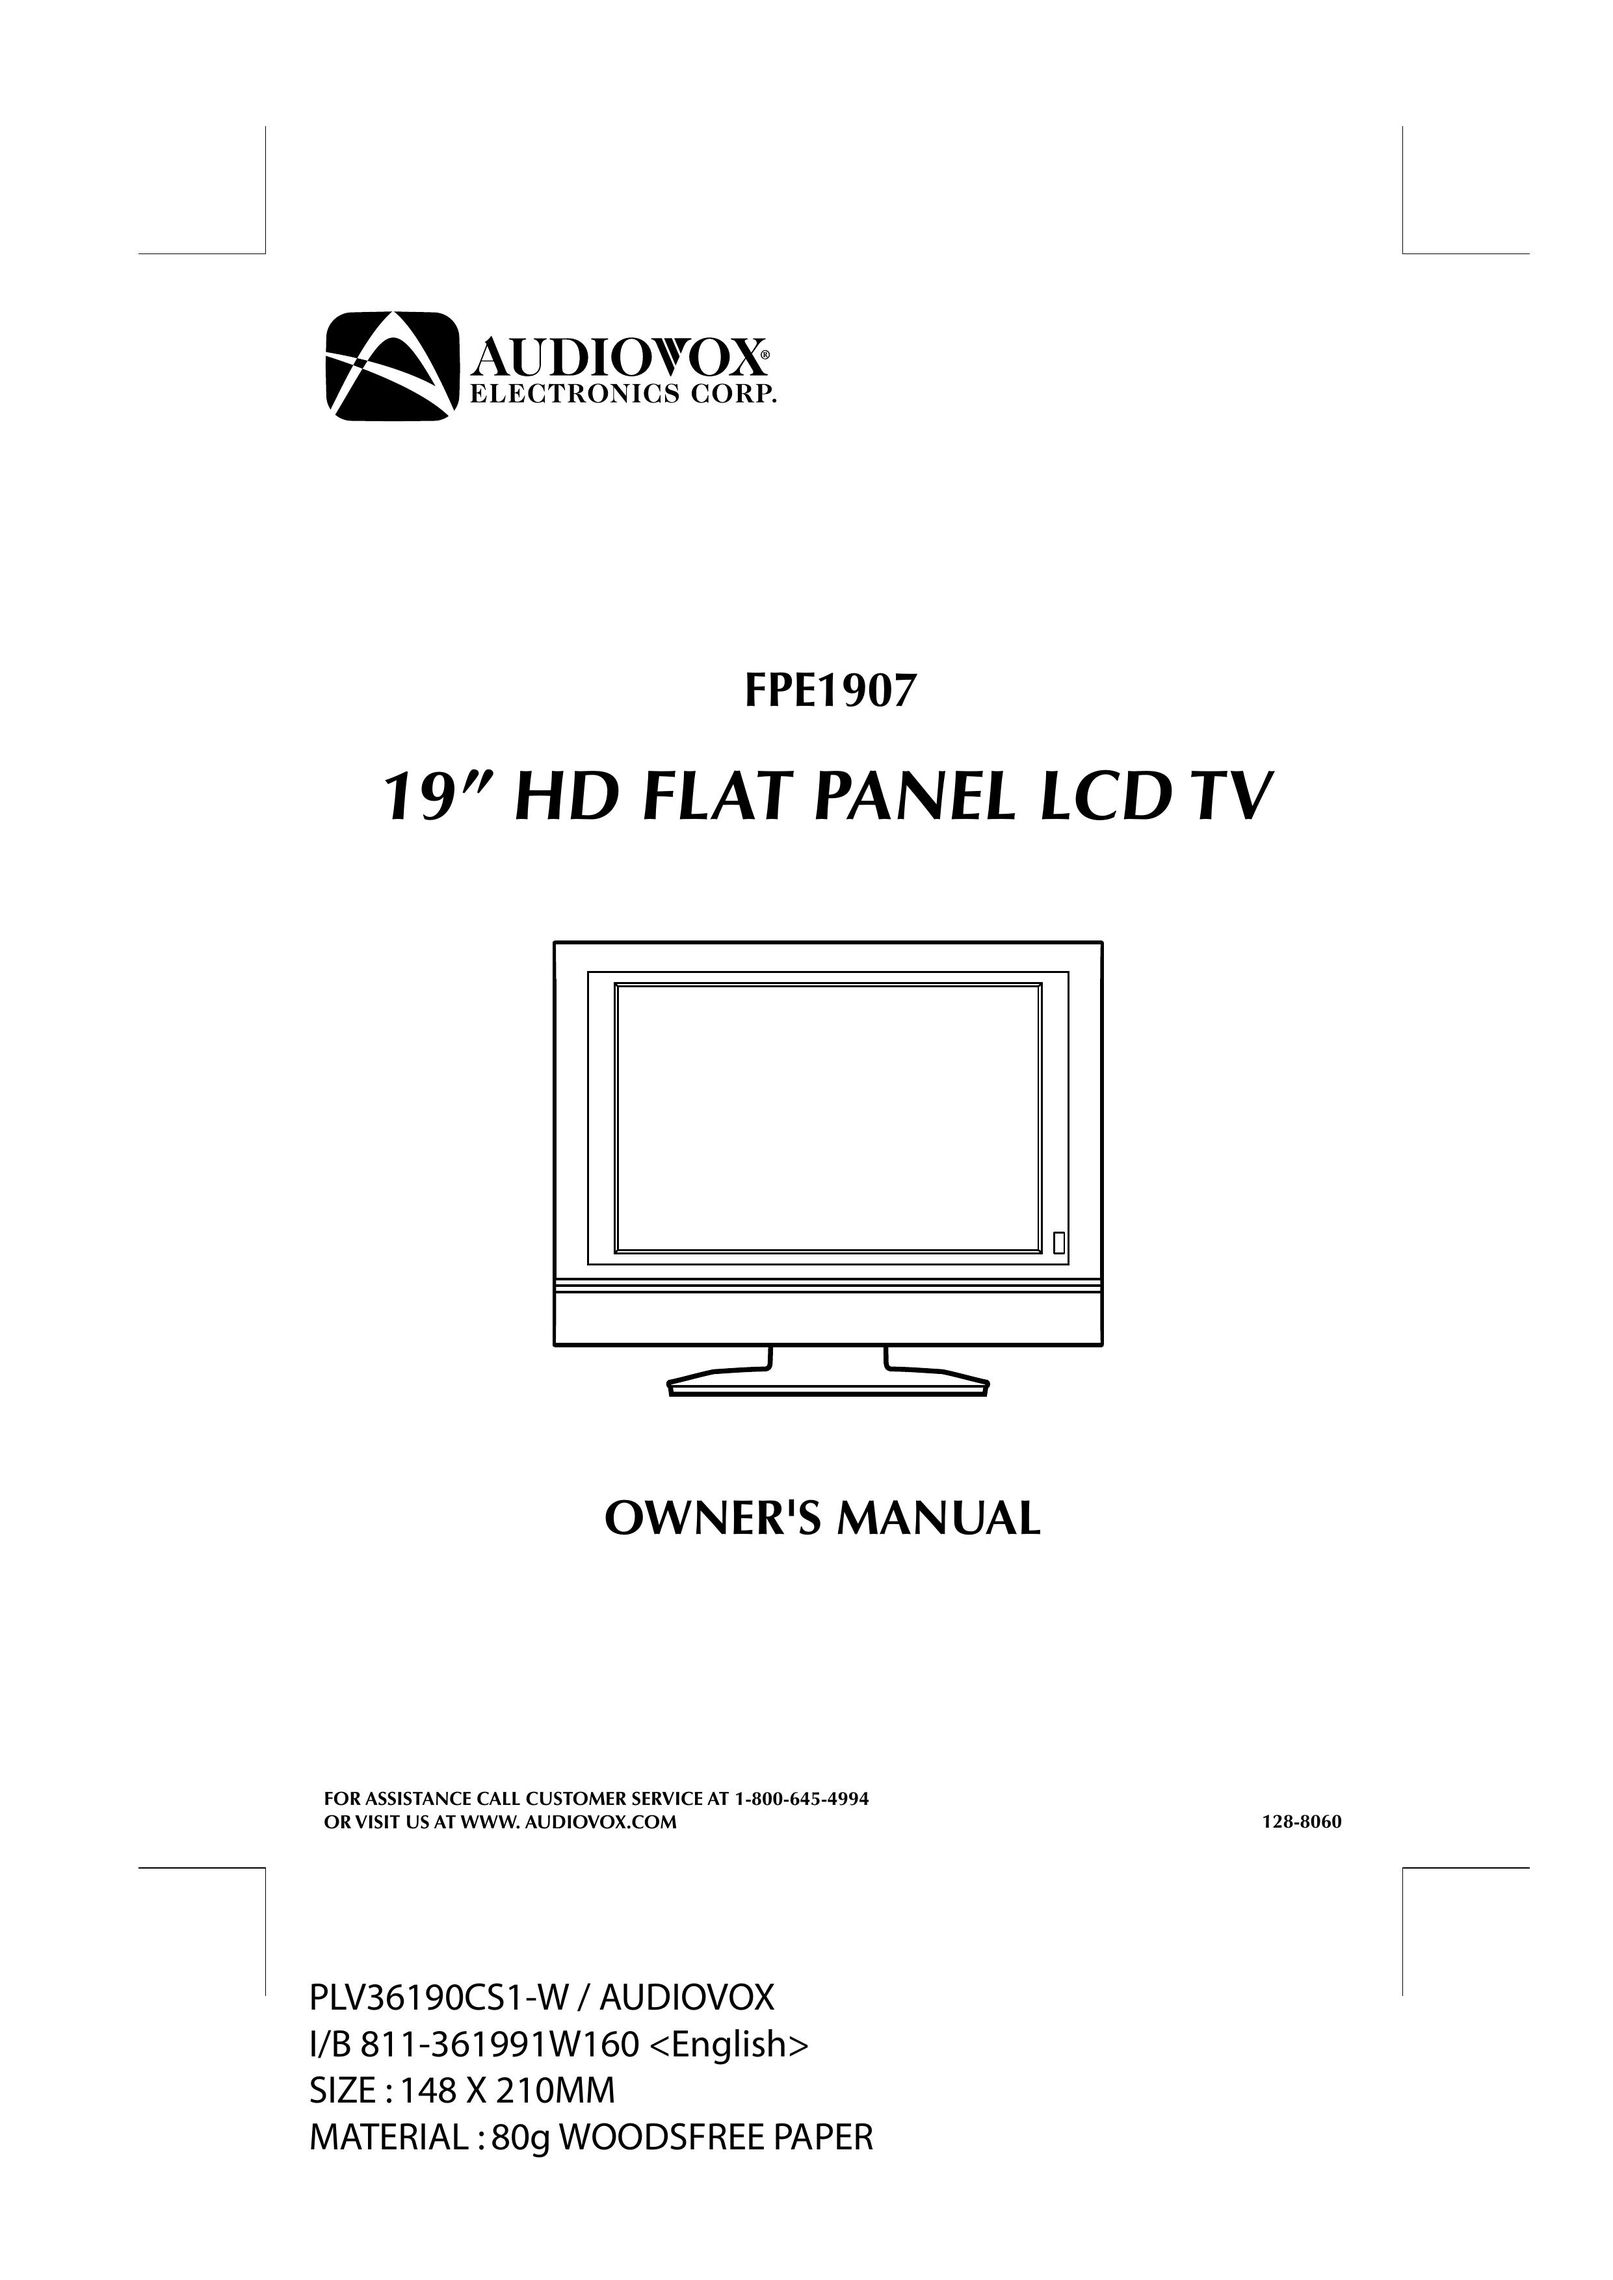 Audiovox FPE1907 Flat Panel Television User Manual